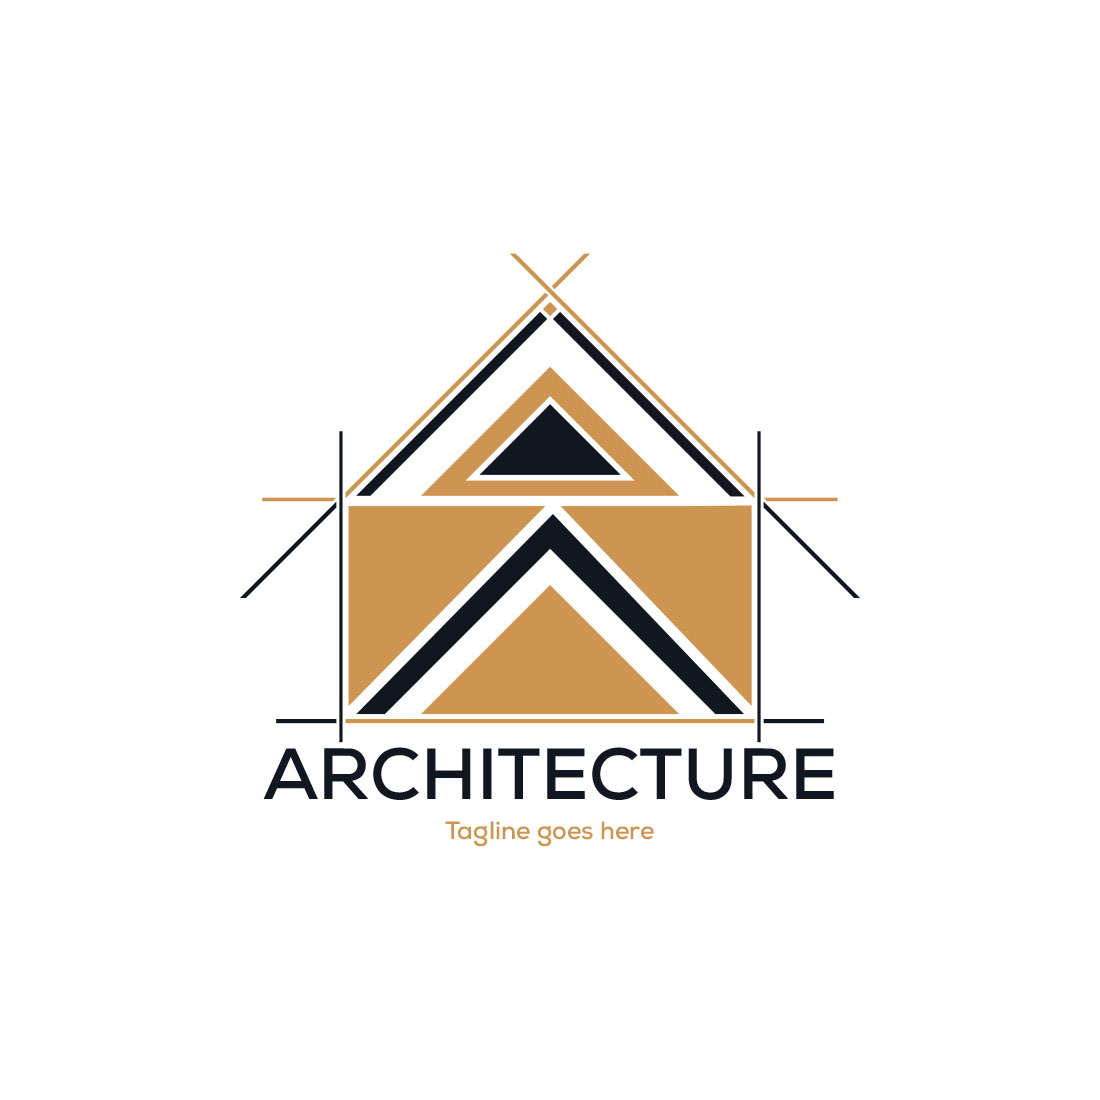 Creative Architecture House Logo Design cover image.